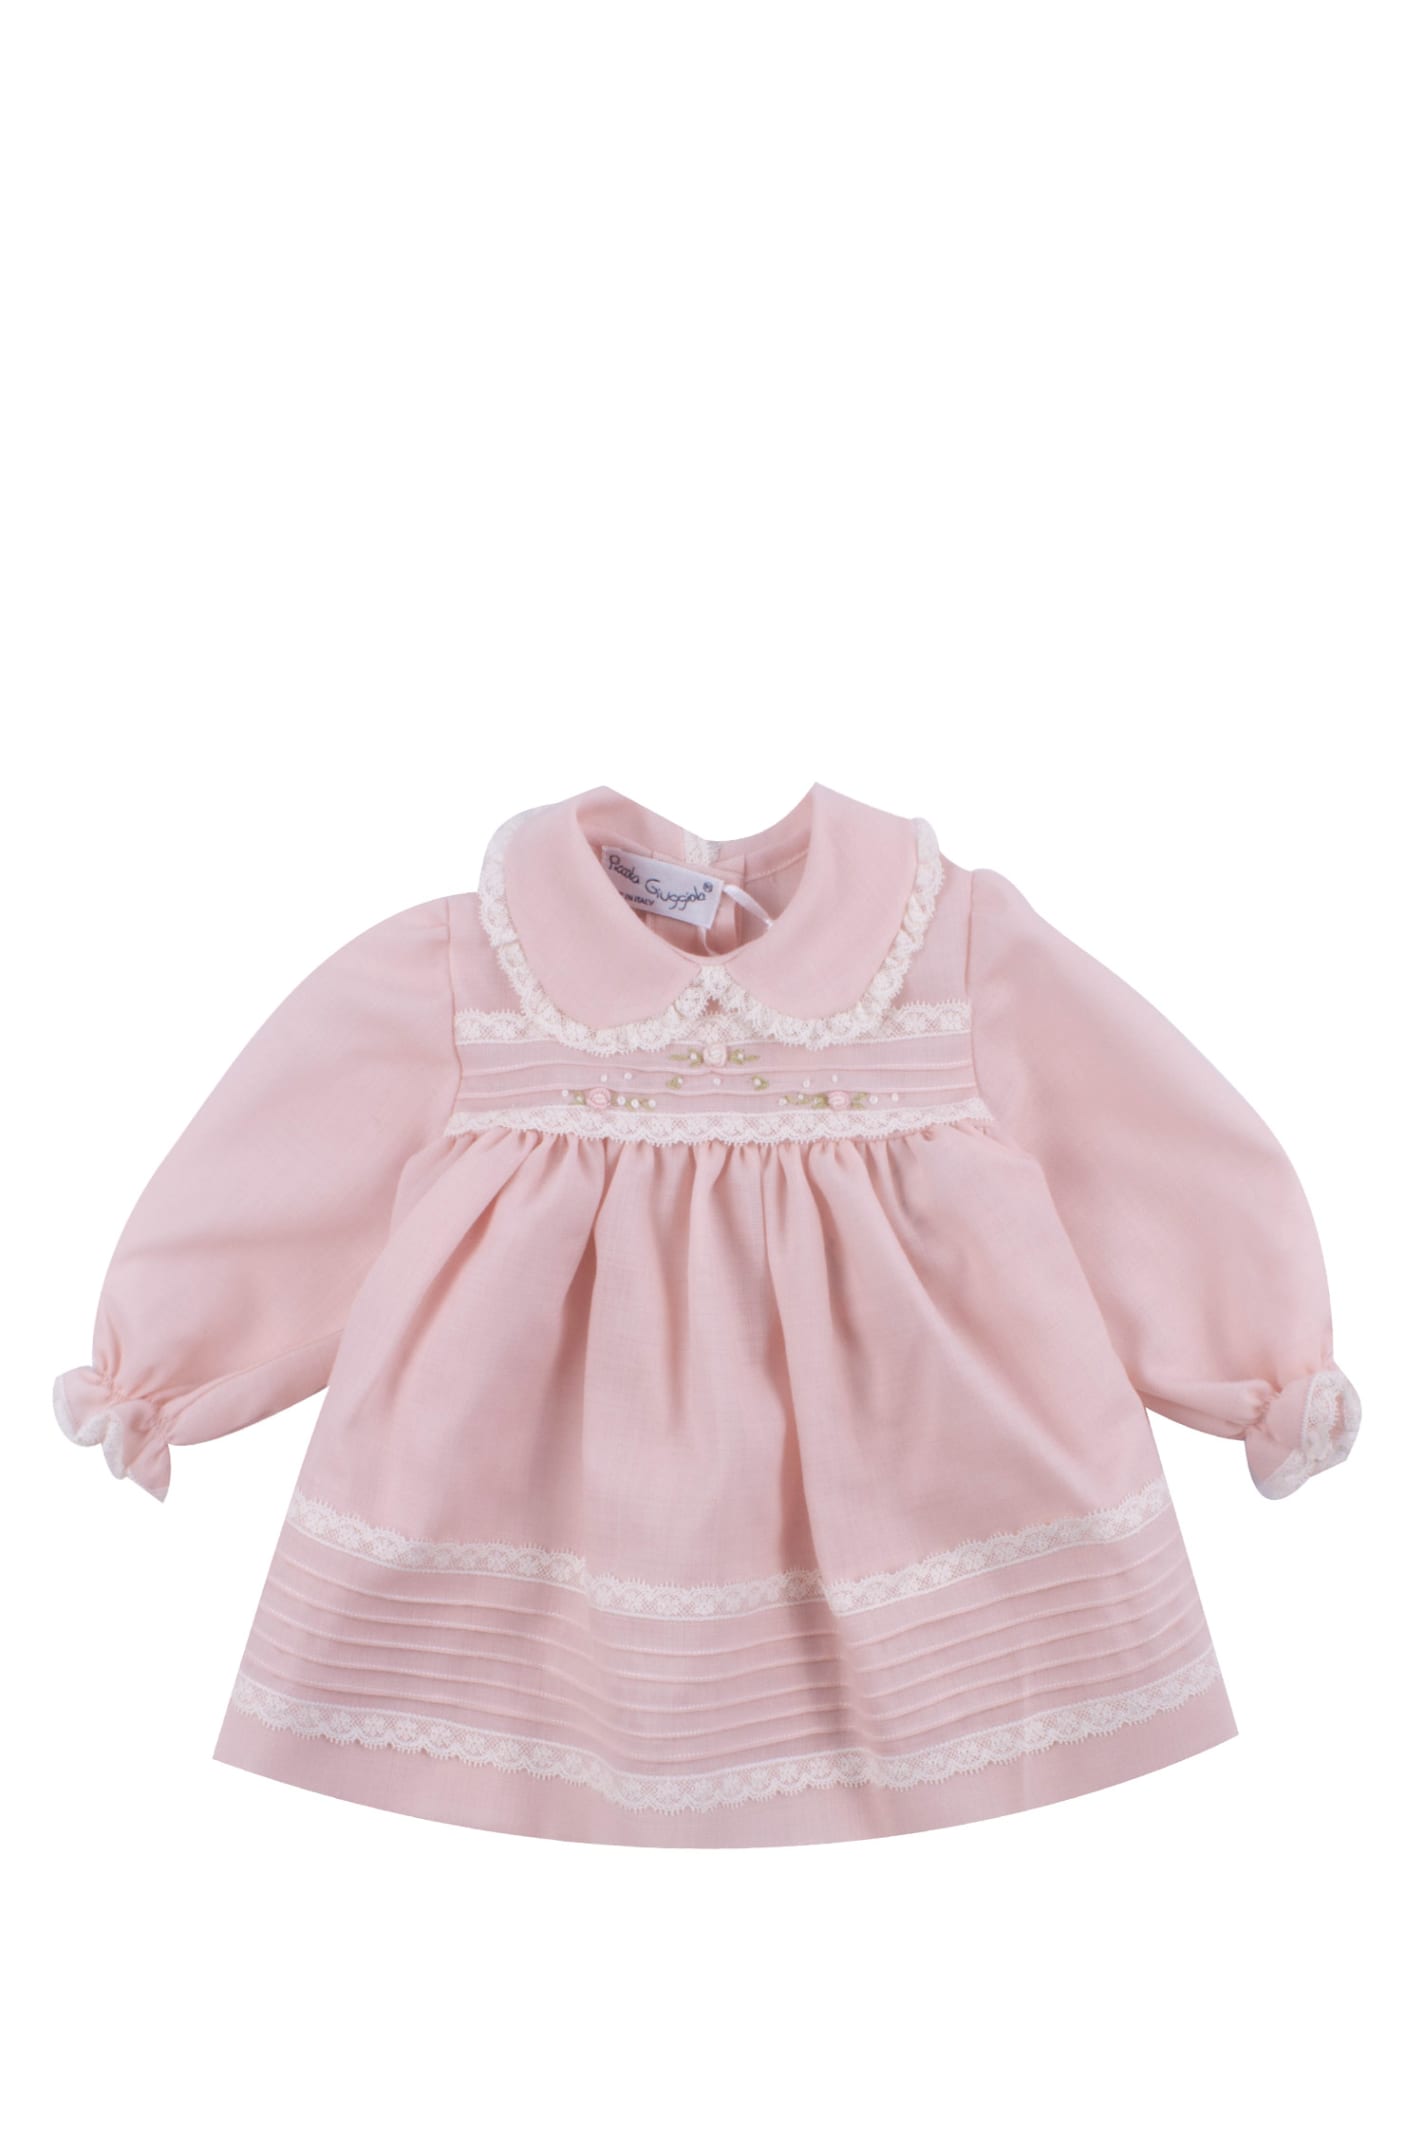 Piccola Giuggiola Babies' Wool Dress In Rose